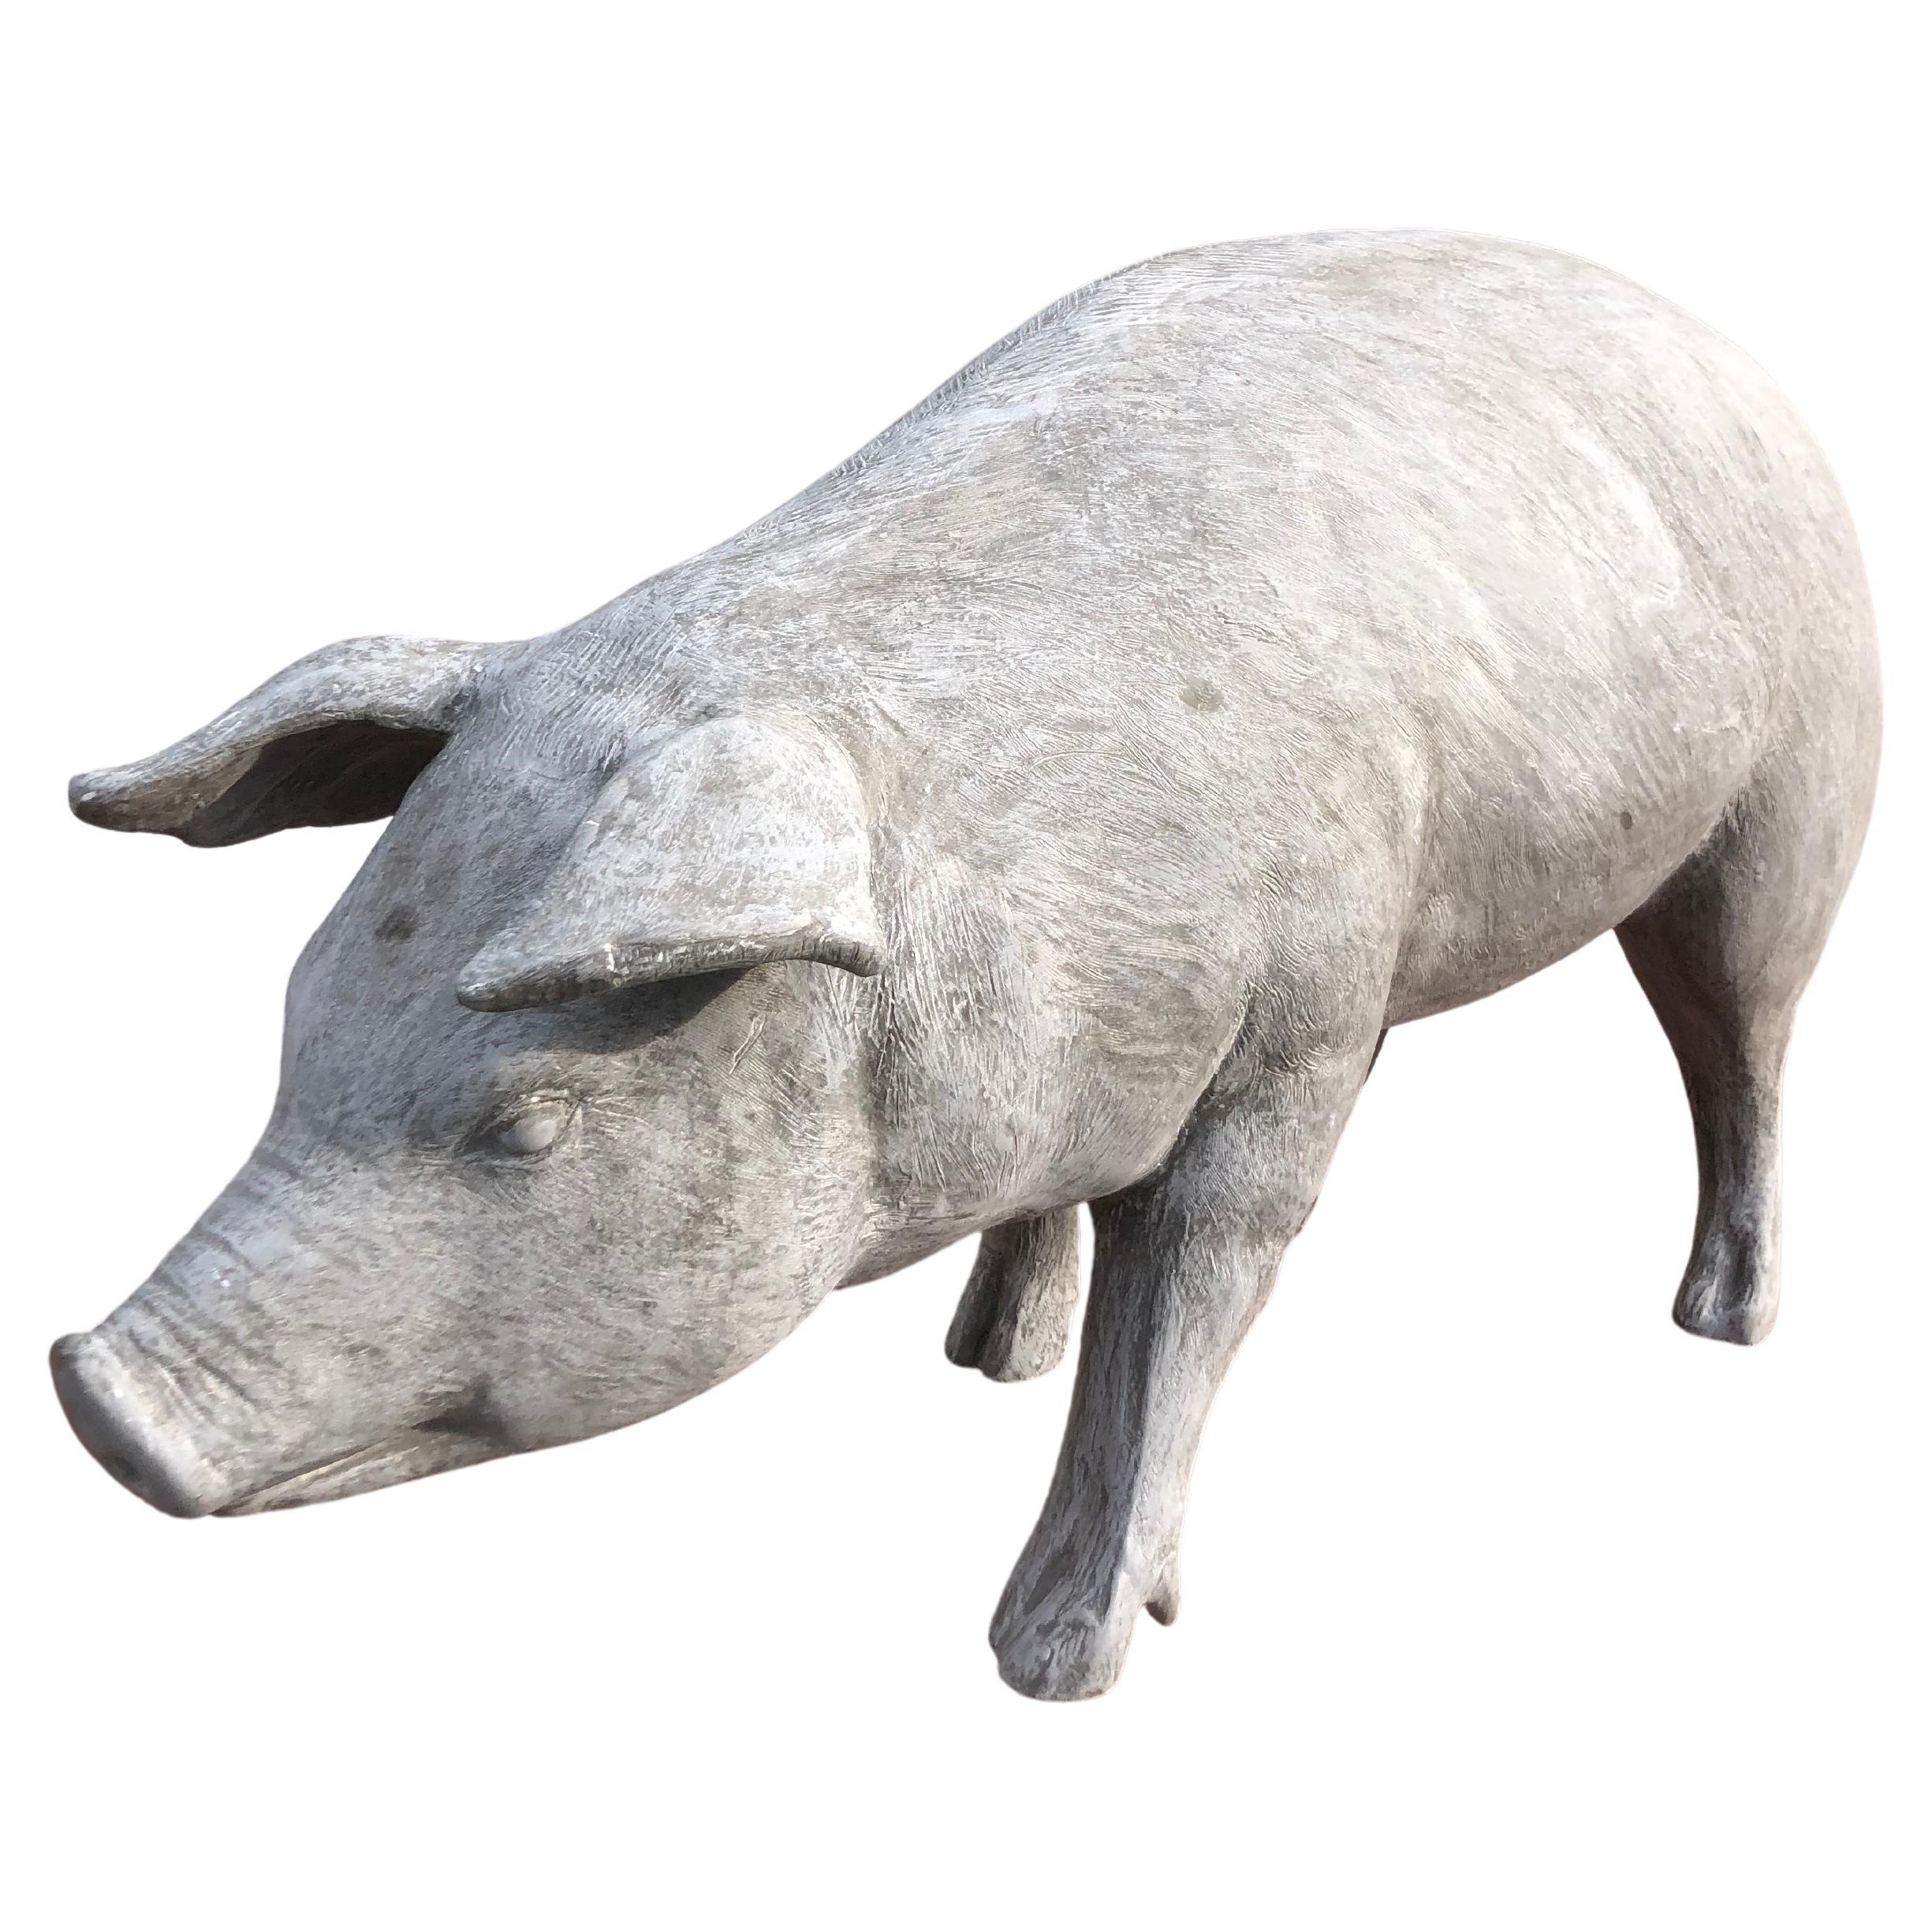 Life Size Fiberglass Pig